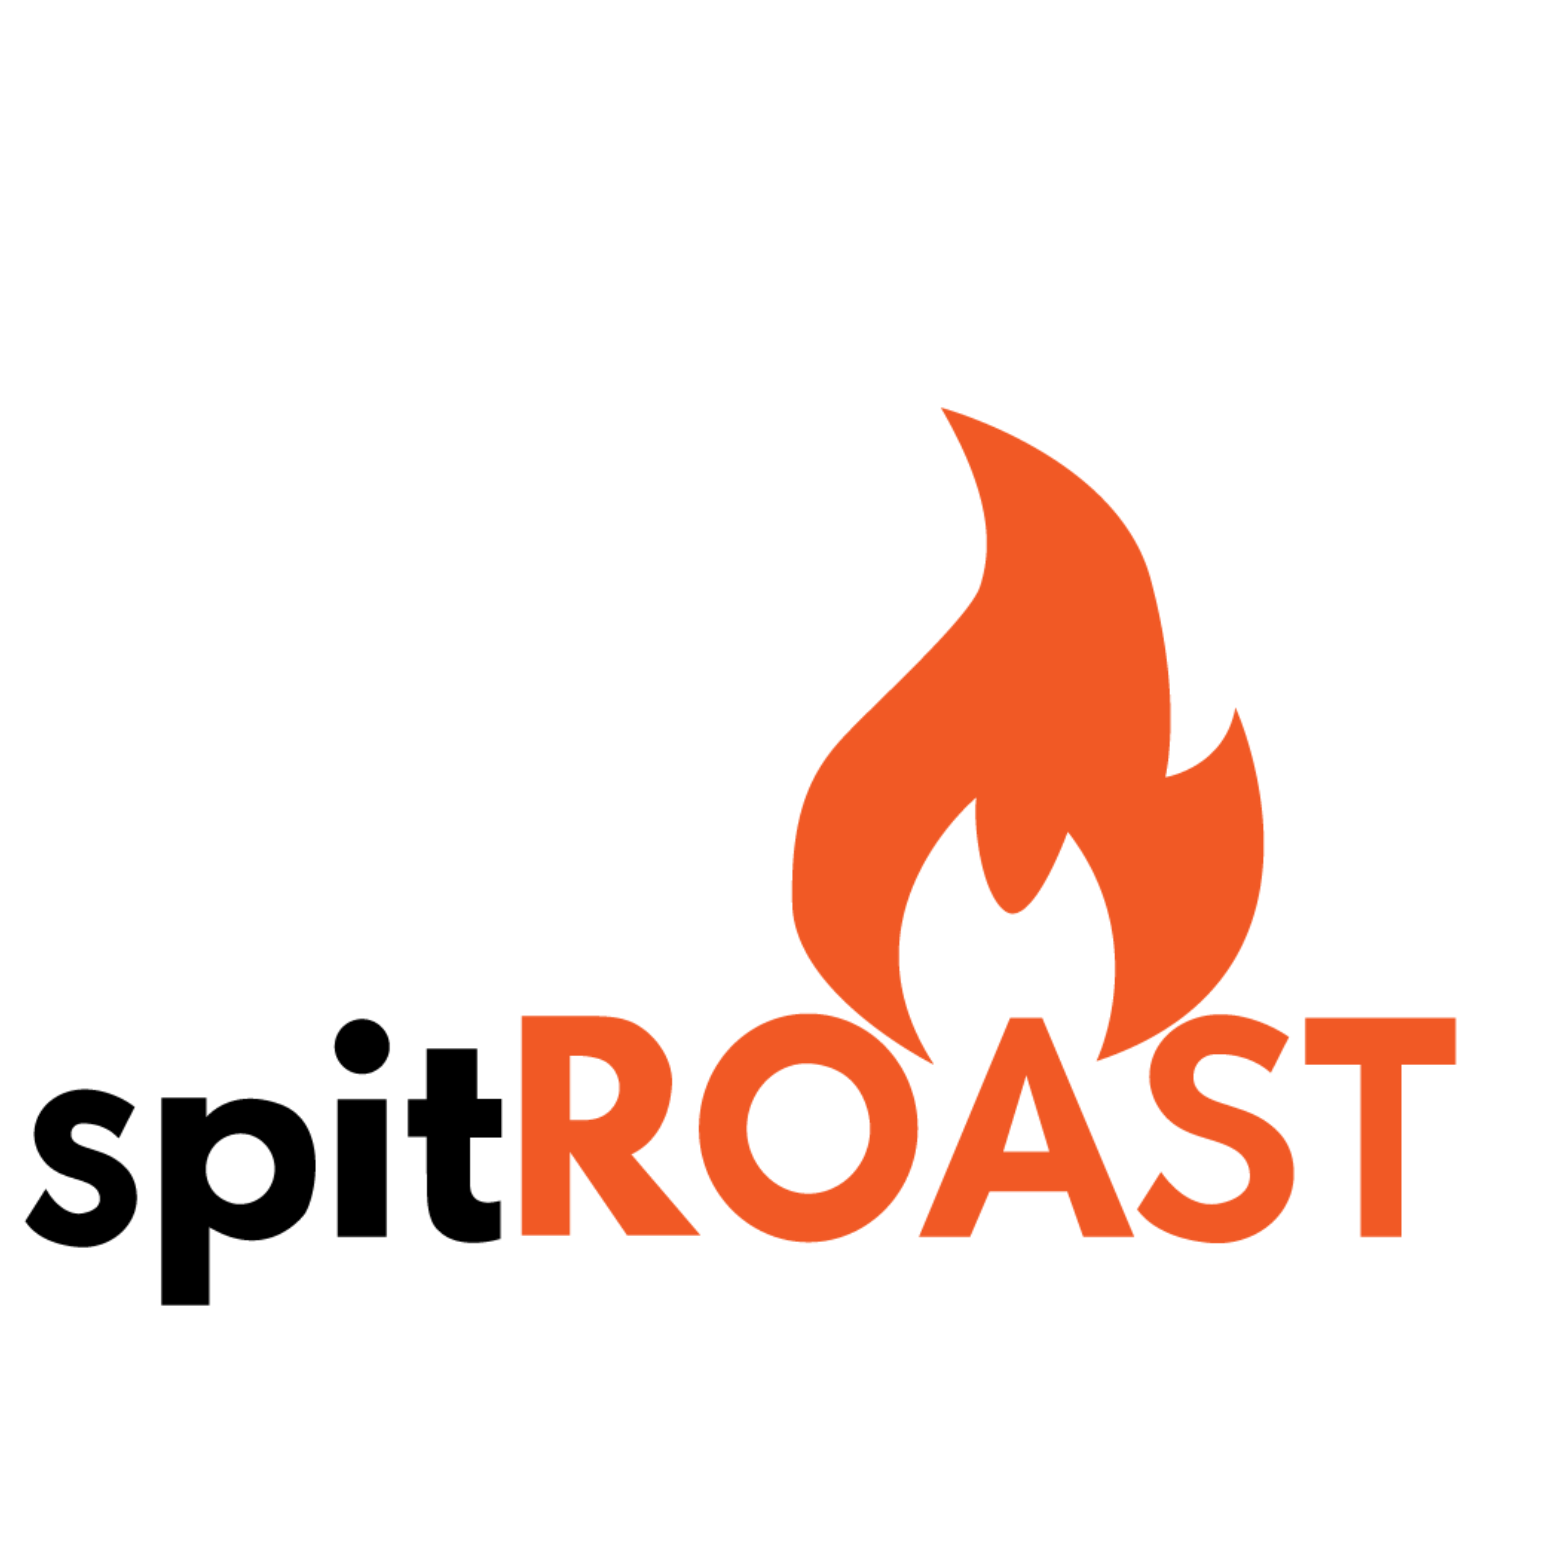 Spitroast Logo 2